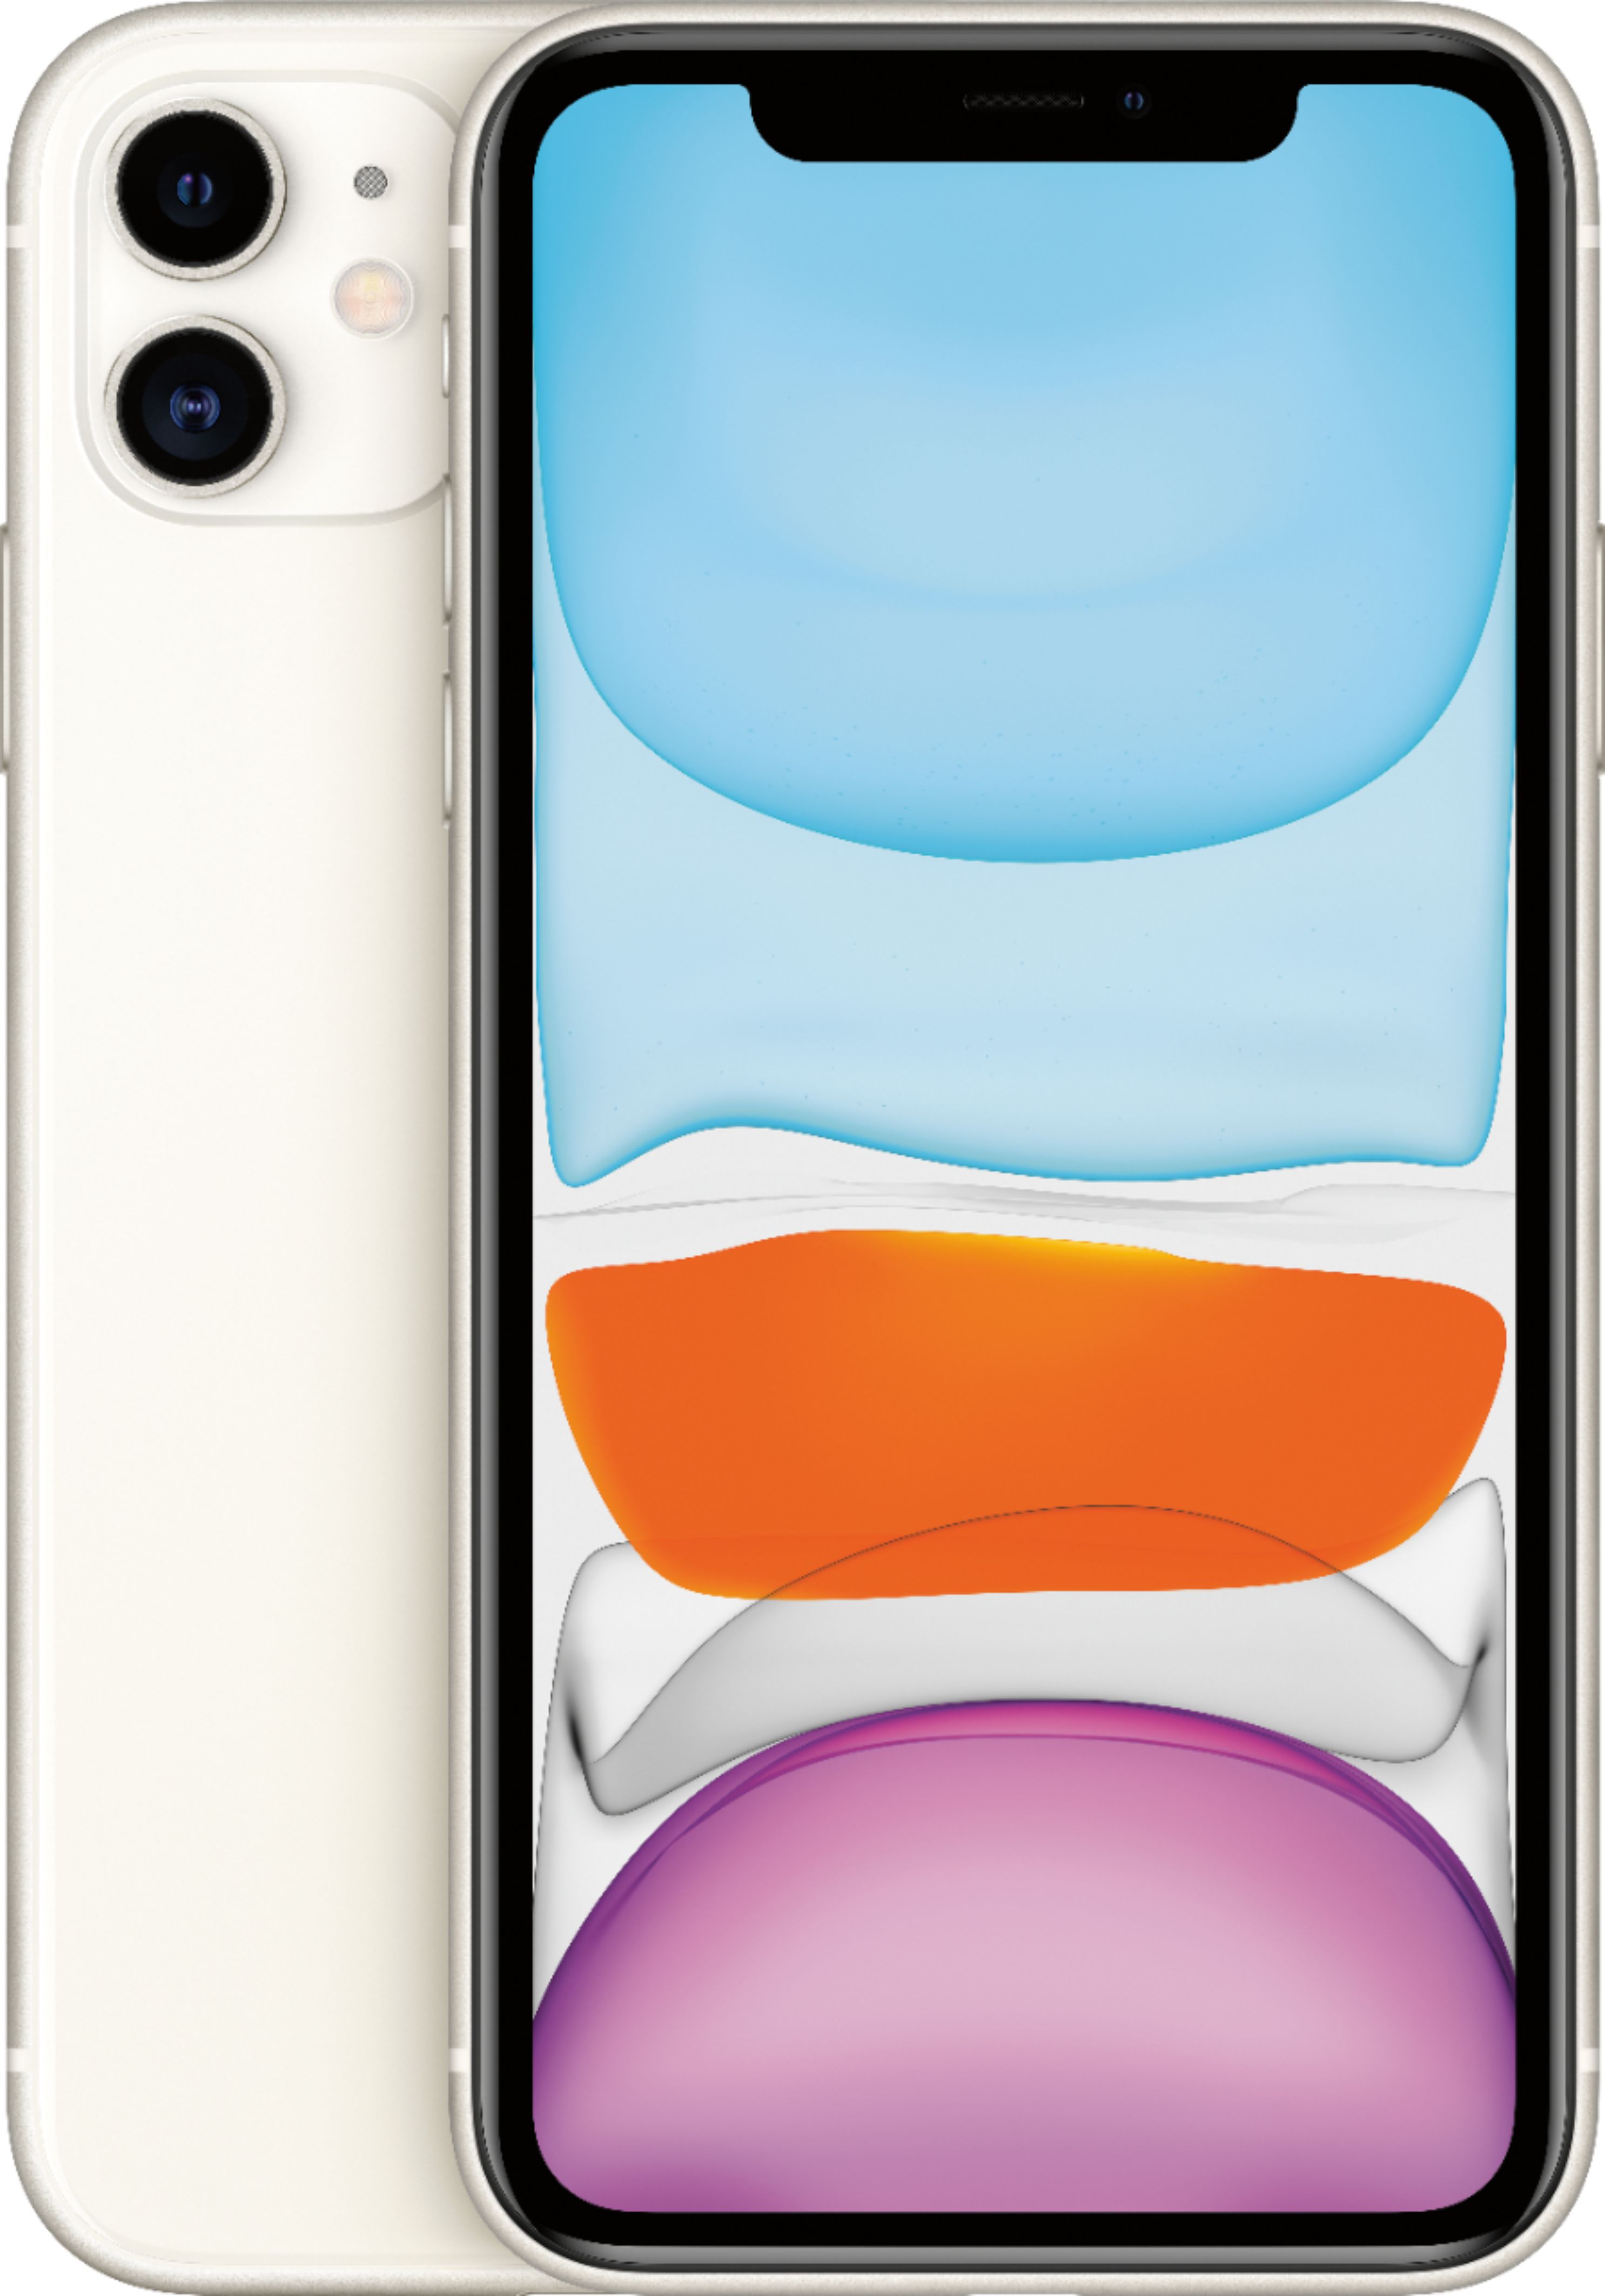 Customer Reviews: Apple iPhone 11 128GB White (Unlocked) MWKV2LL/A